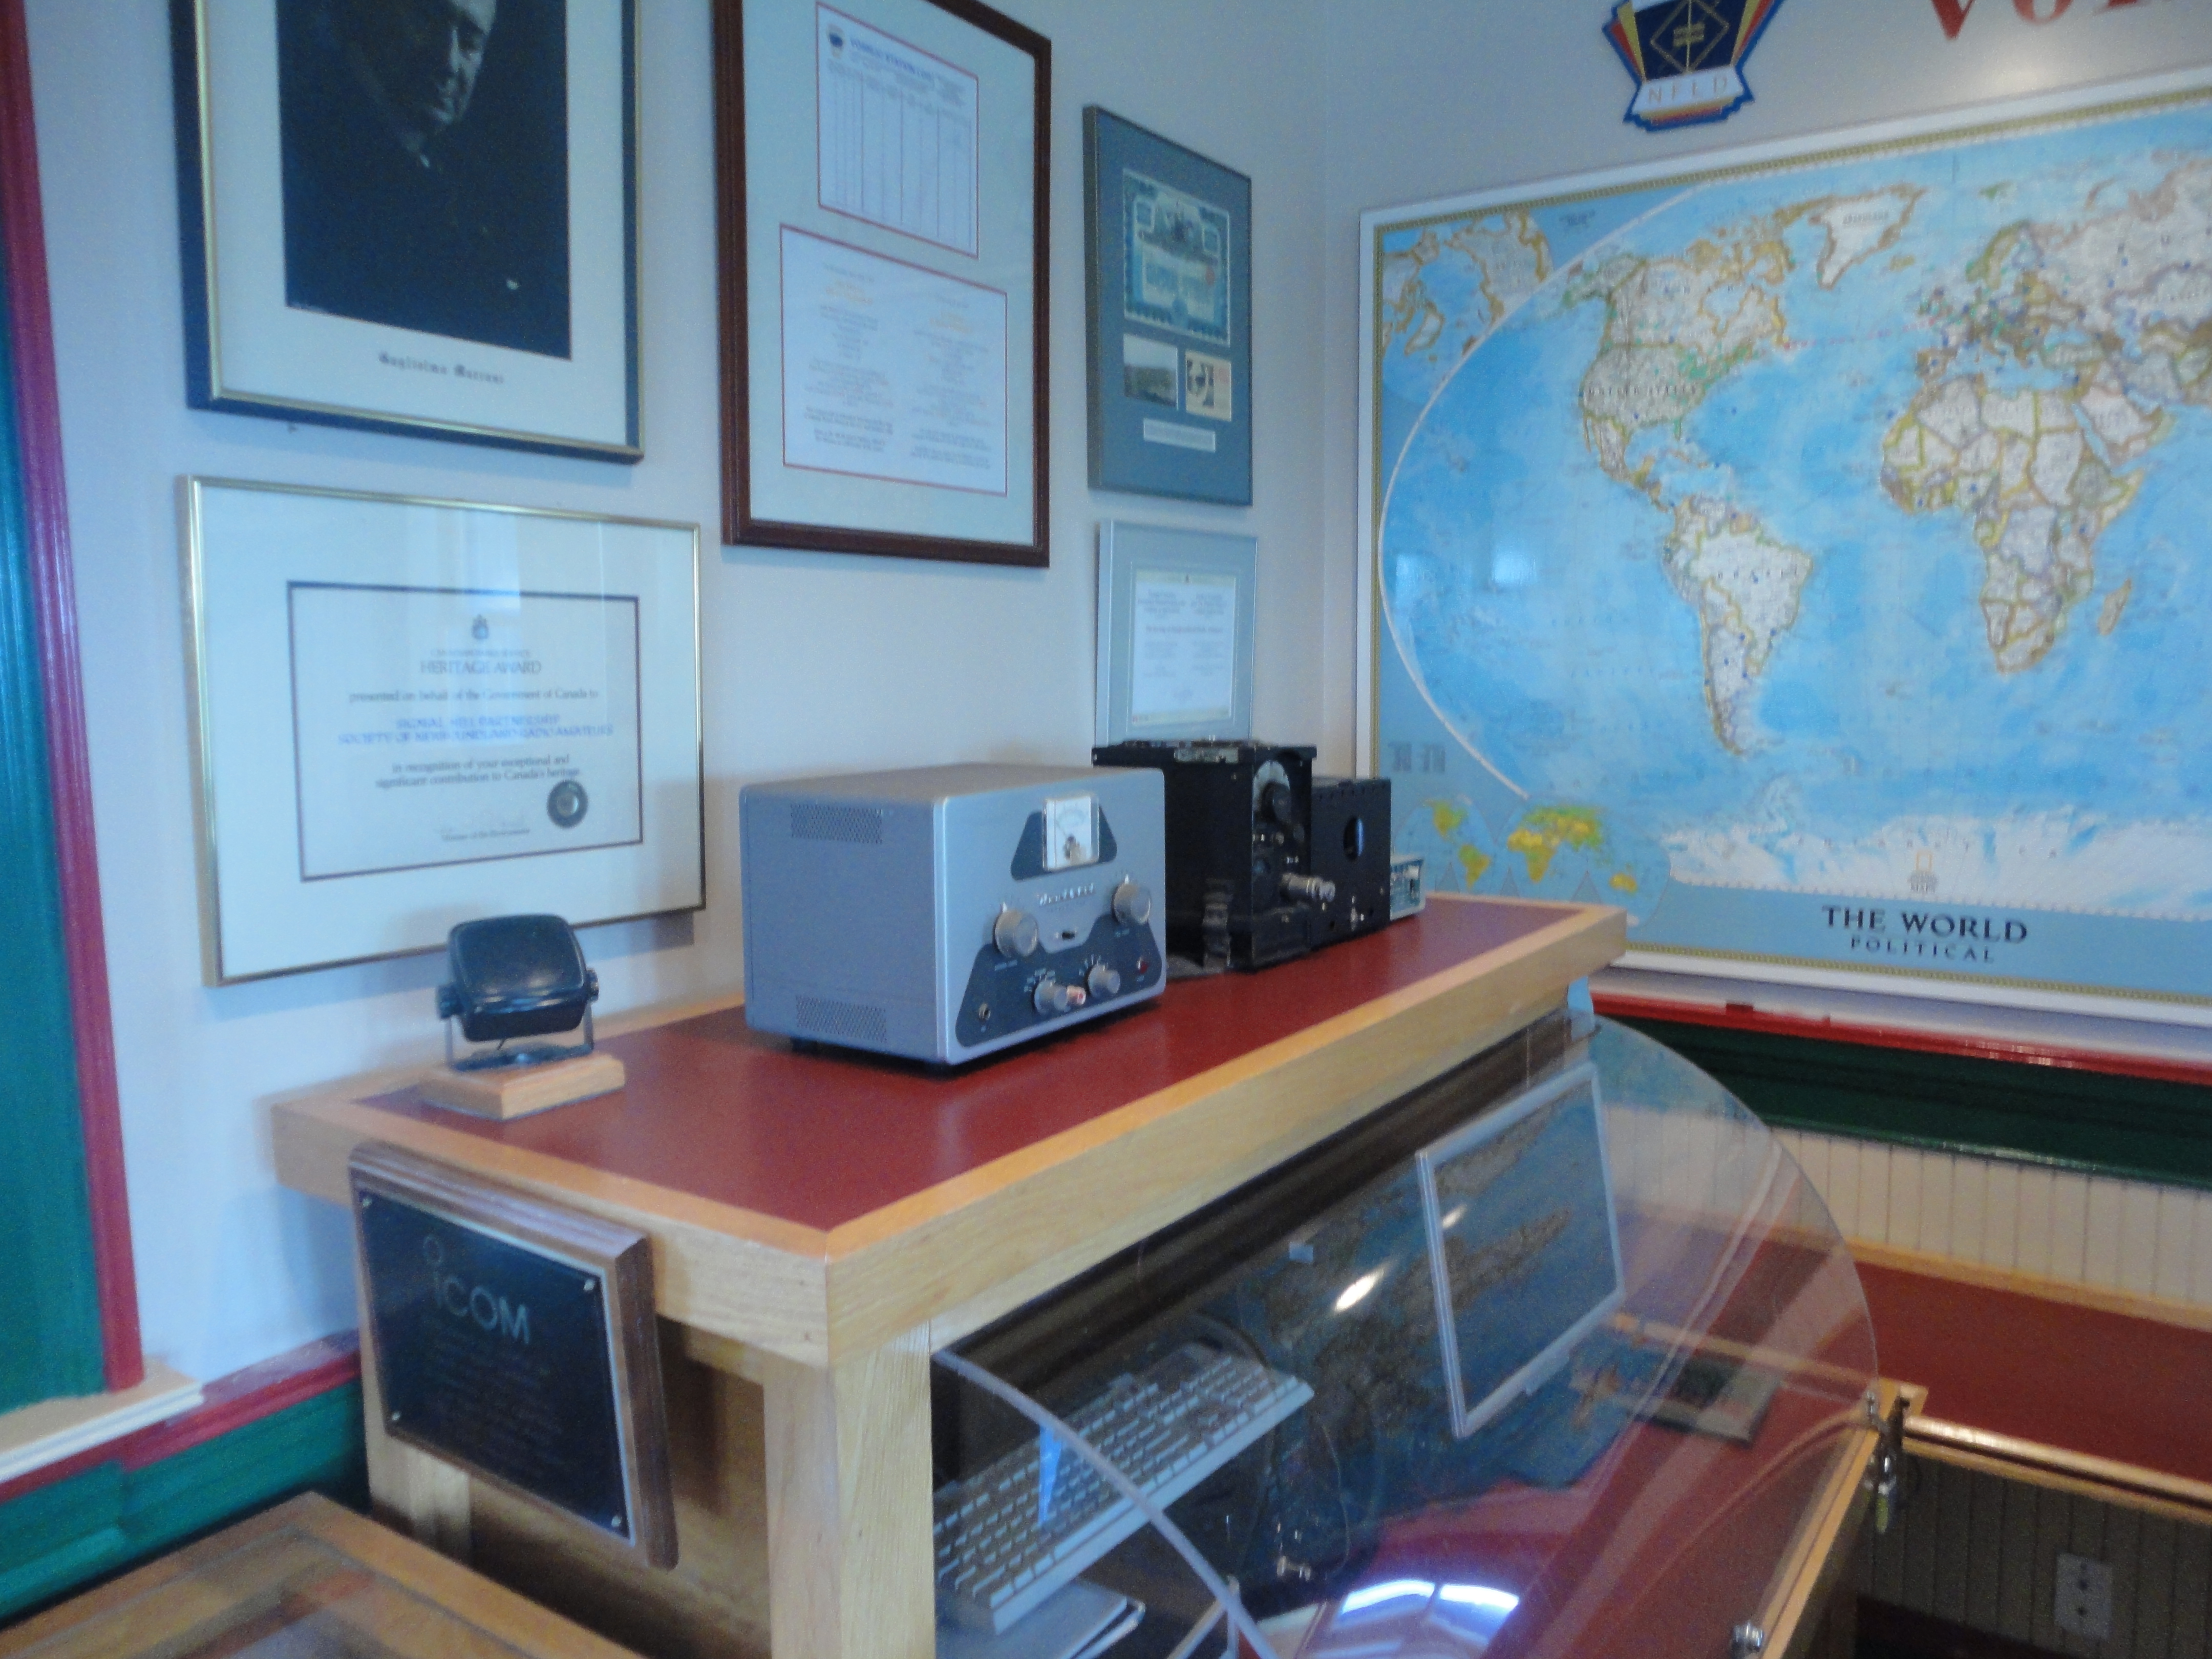 Interior of Cabot Tower with Radio exhibit